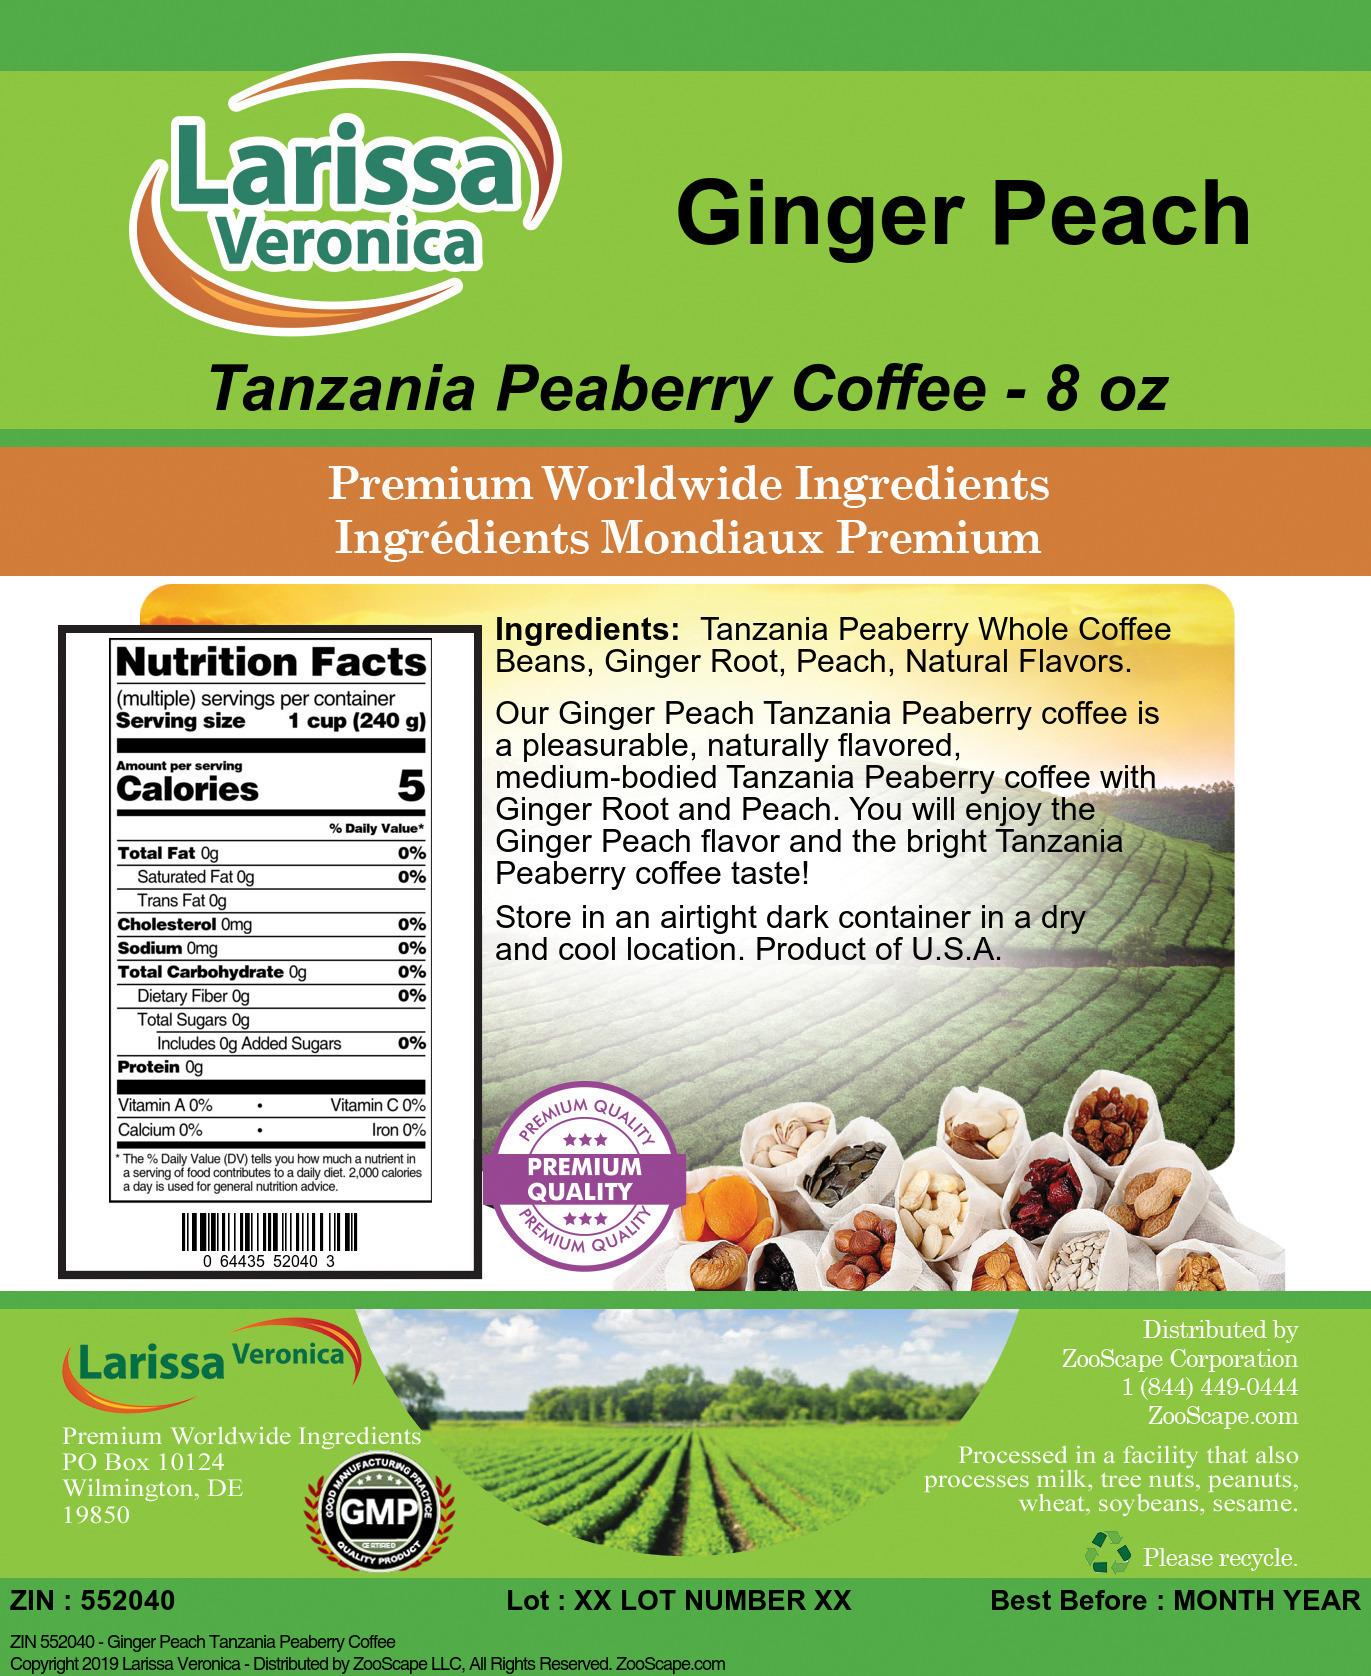 Ginger Peach Tanzania Peaberry Coffee - Label